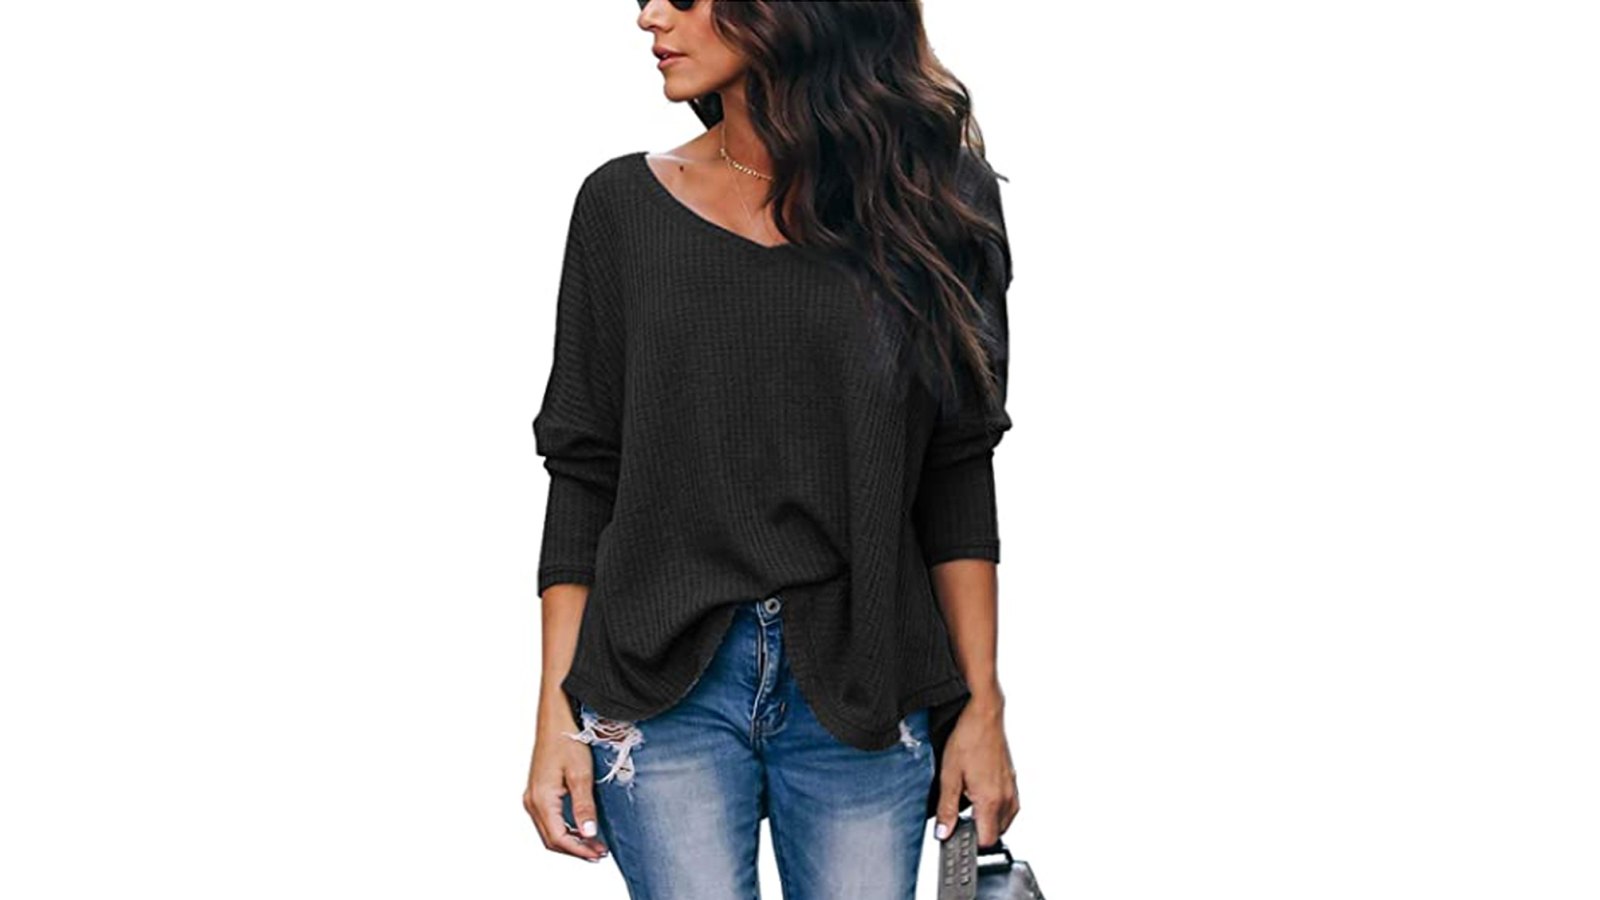 iGENJUN Women's Casual V-Neck Off-Shoulder Batwing Sleeve Pullover Sweater Top